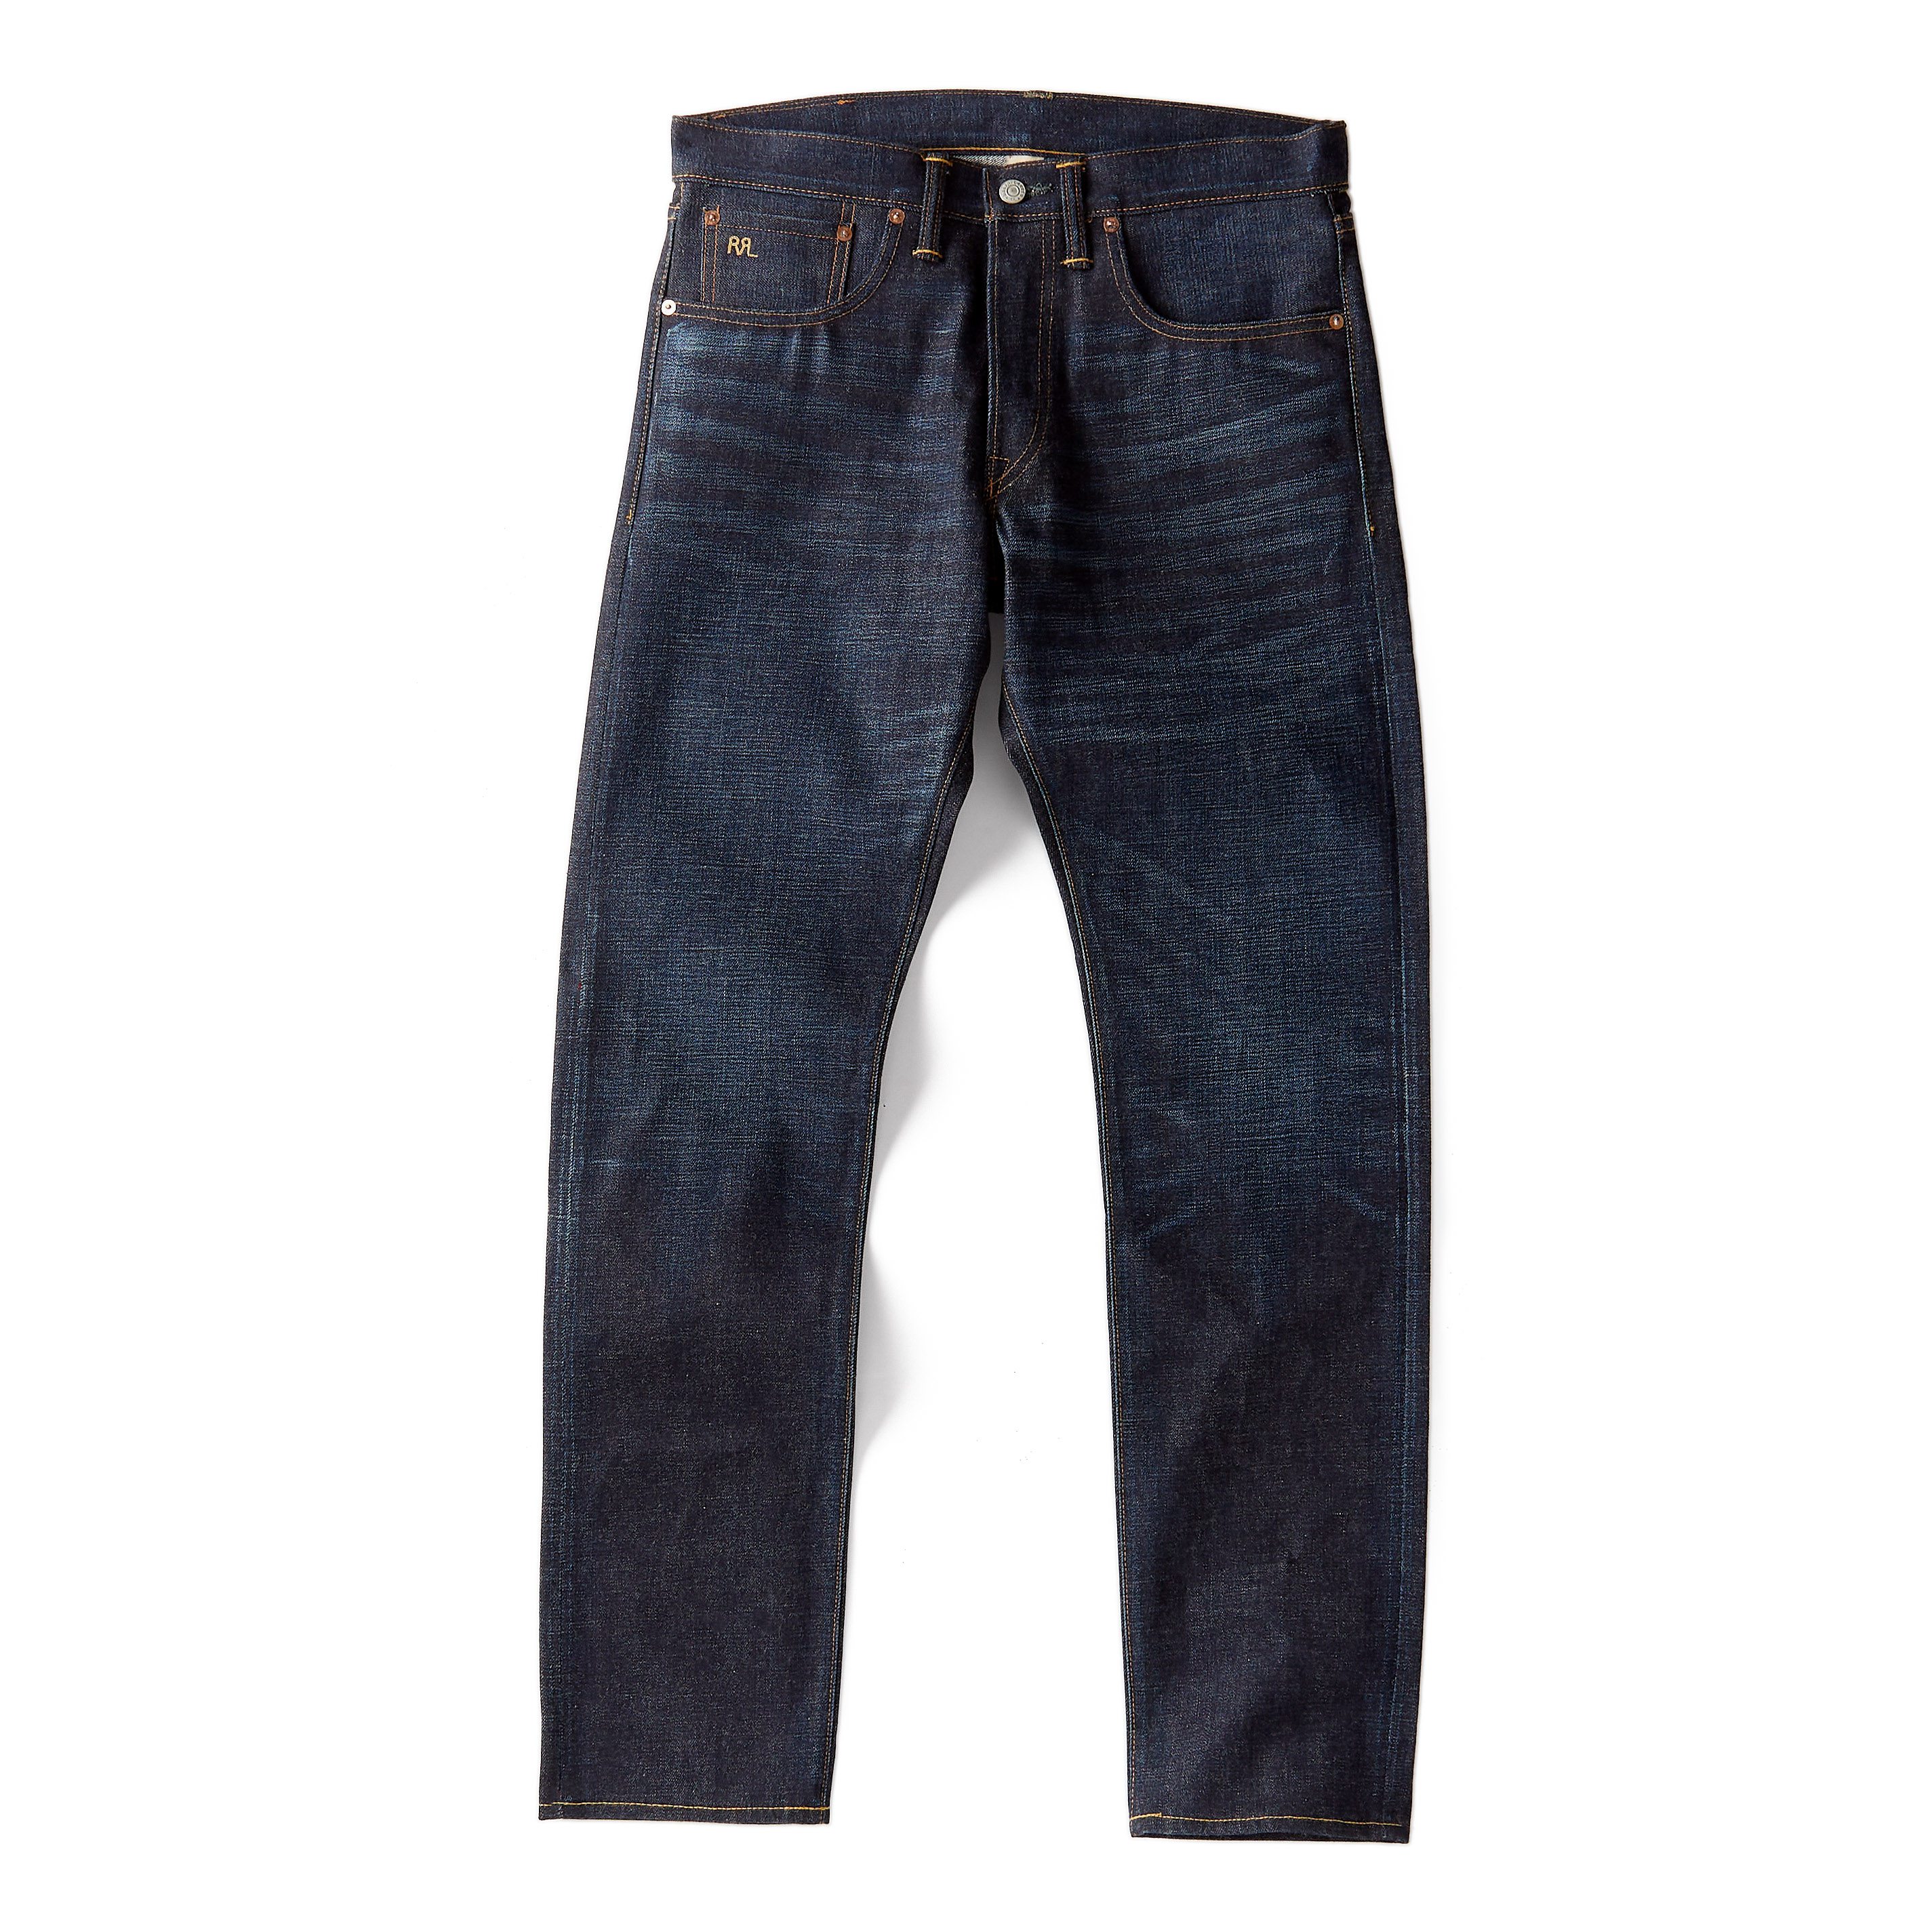 Pro Original Darks - Jeans made in USA from Japanese denim